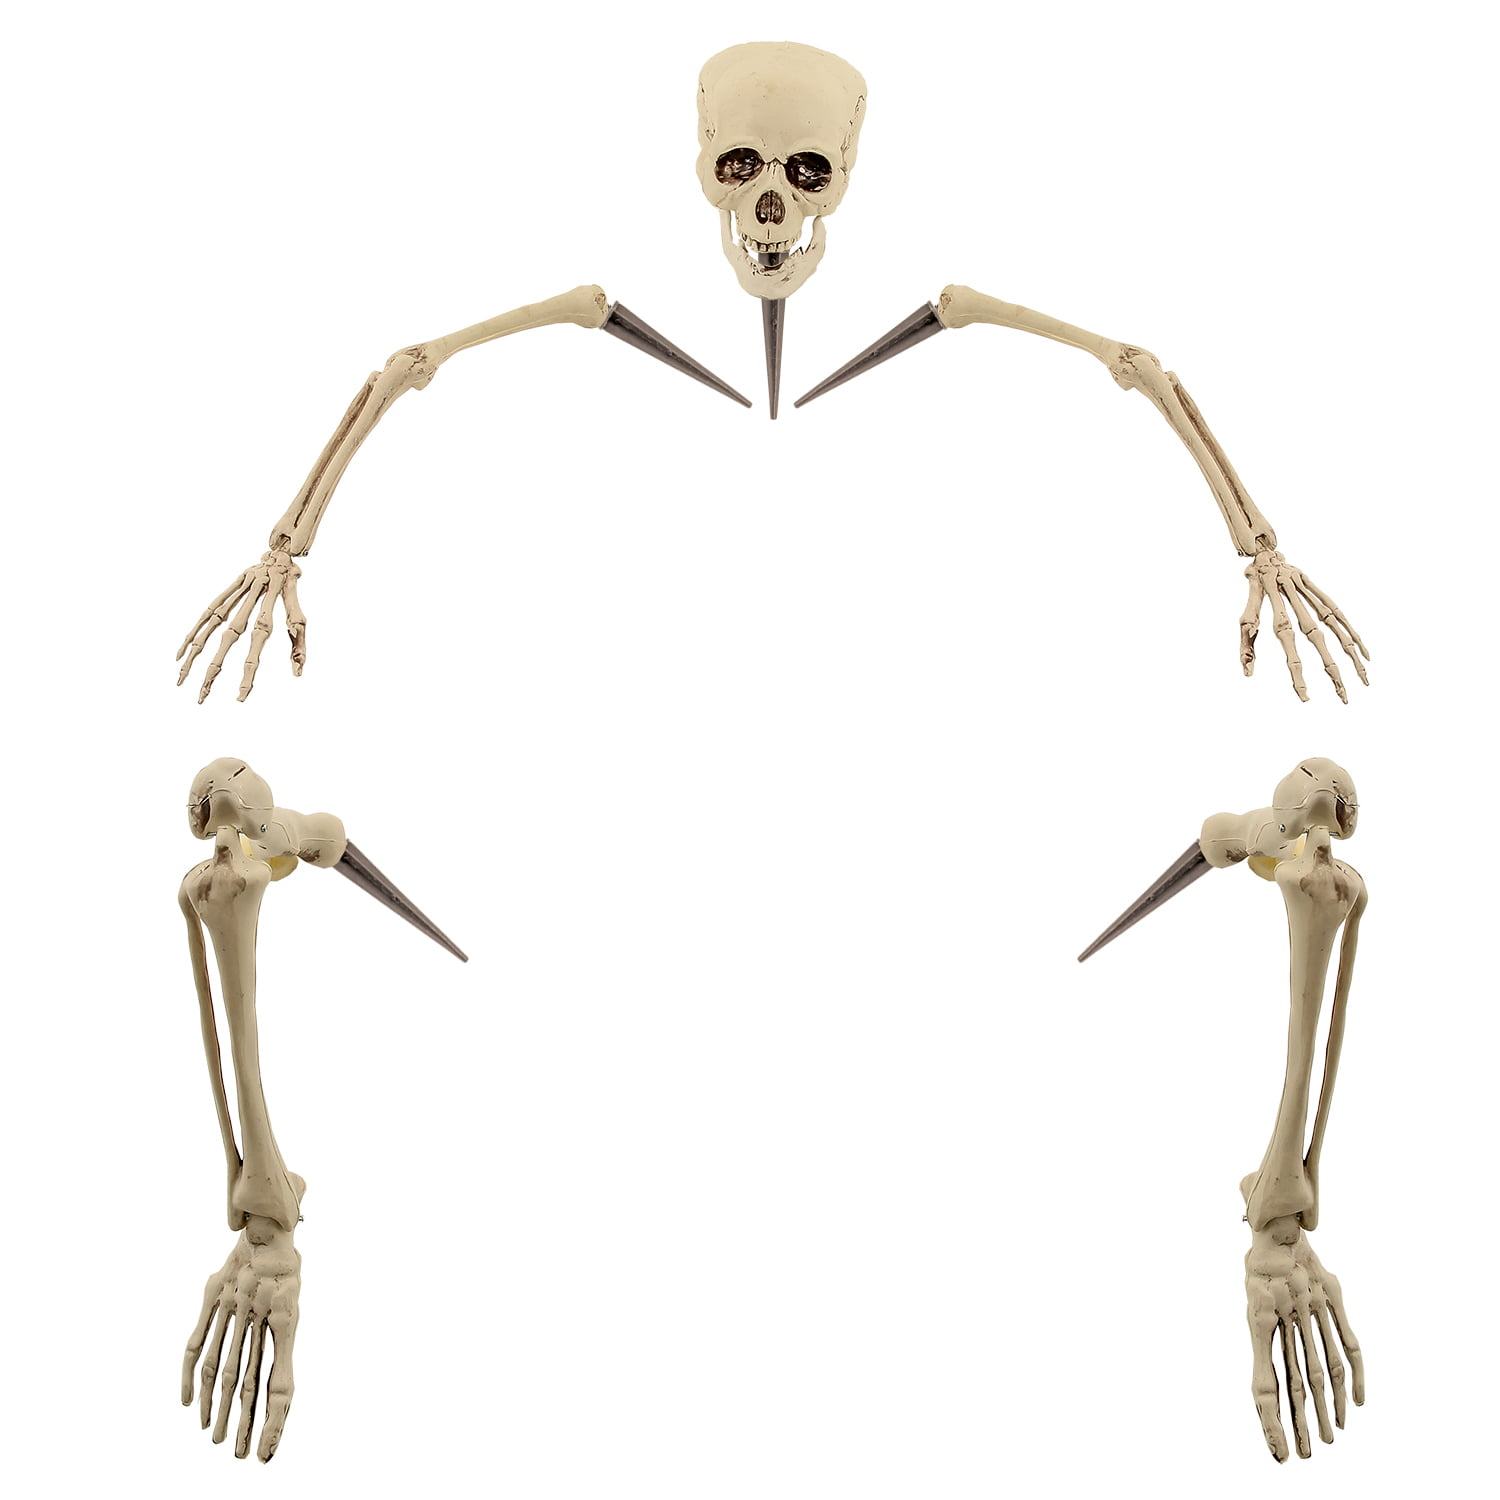 Skeleton Bones and Skull for Halloween Decor or Spooky Graveyard Ground Decoration Plastic Bones Scary Props Life Size Skull Bones Decor